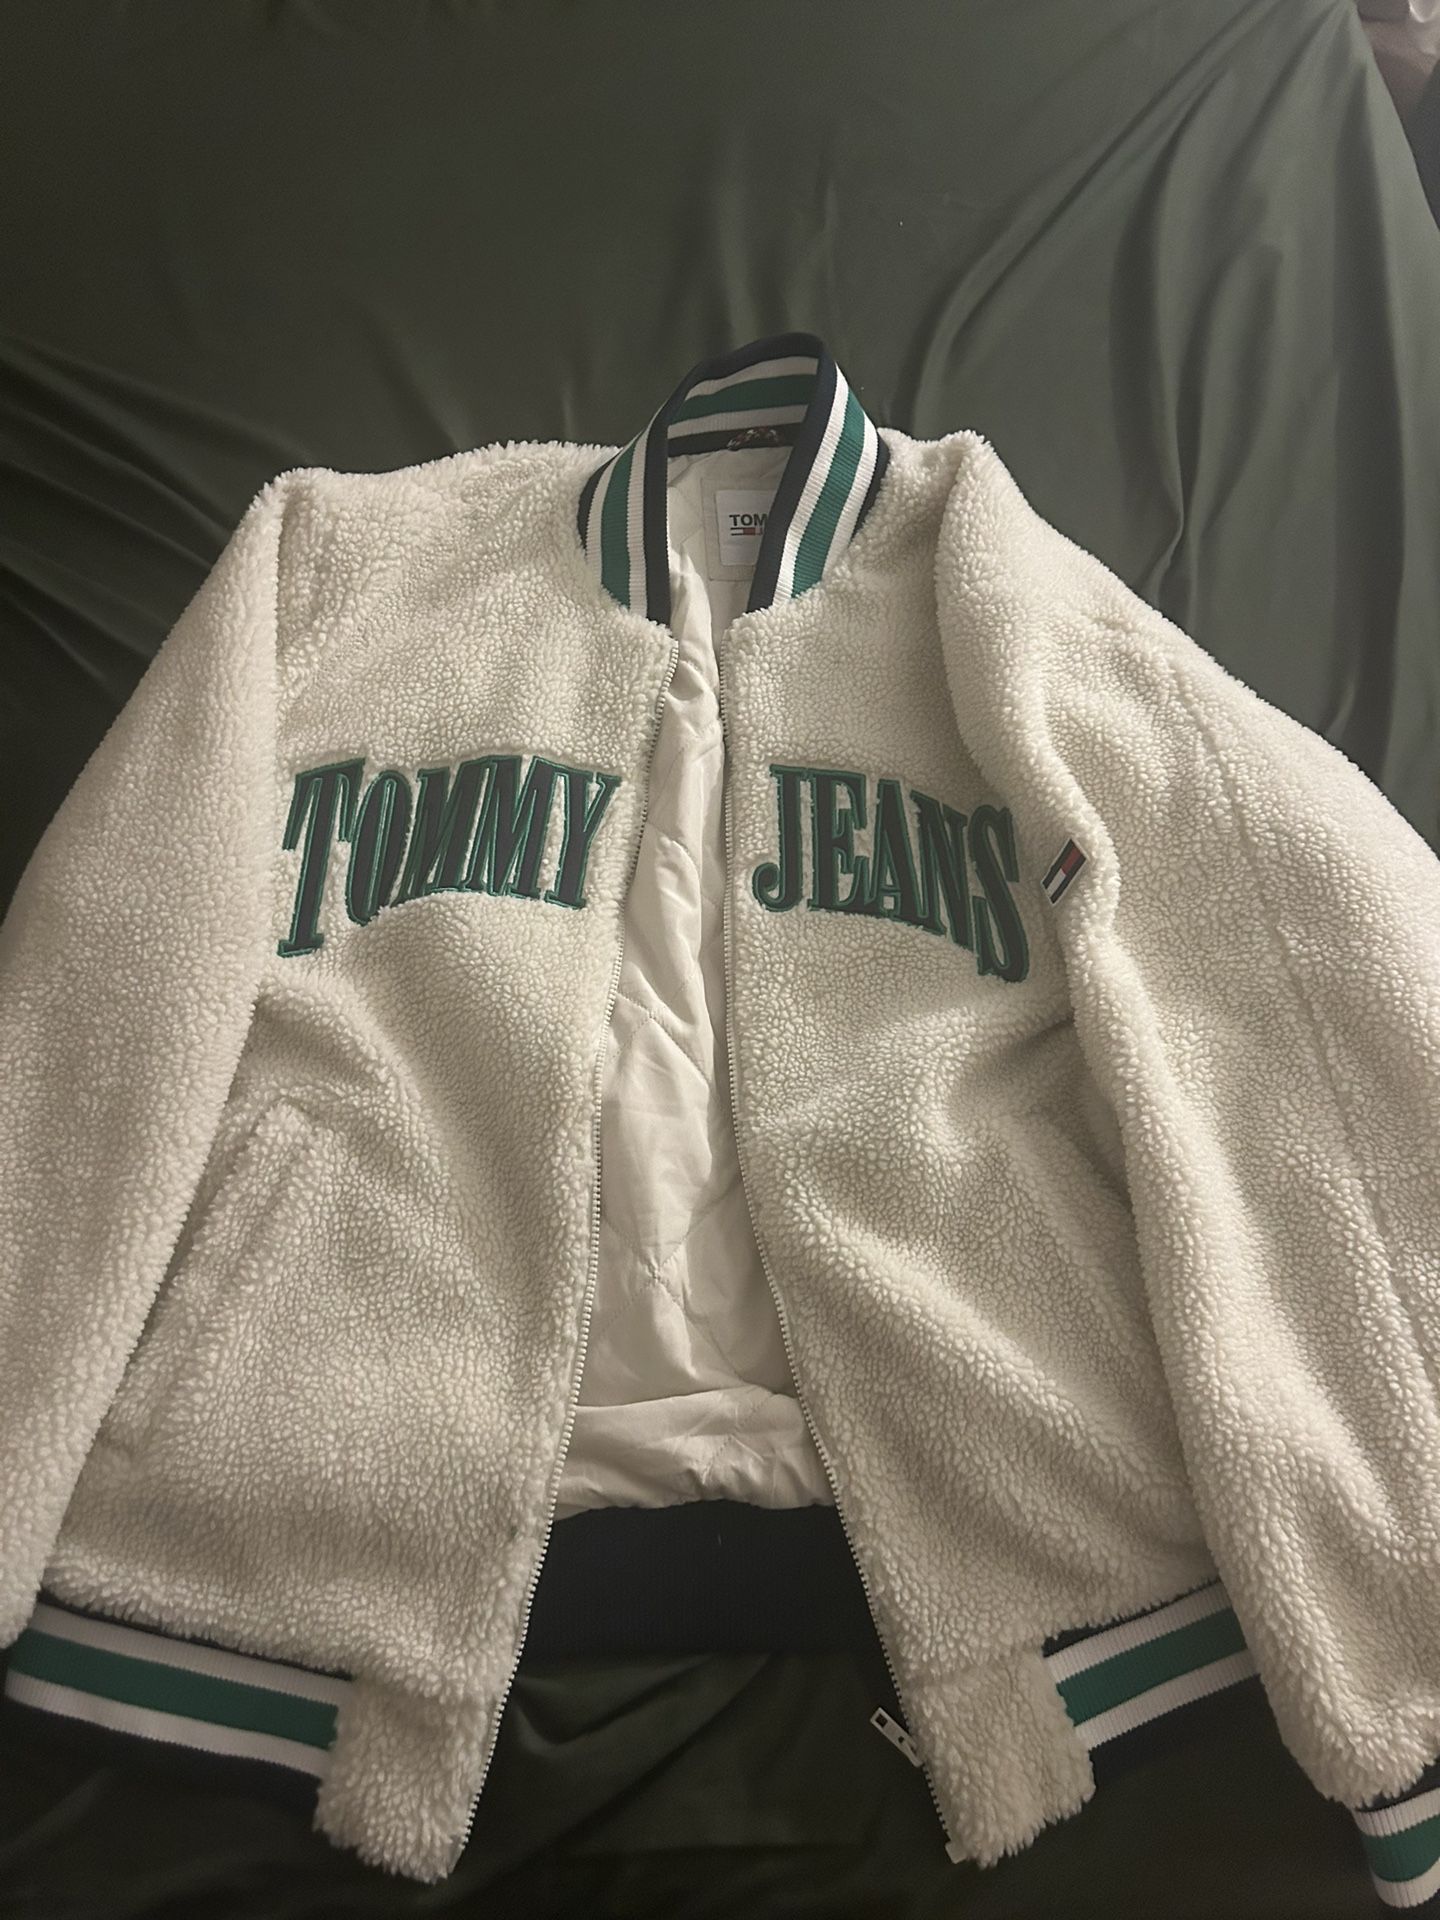 Tommy Jeans Sherpa Jacket 